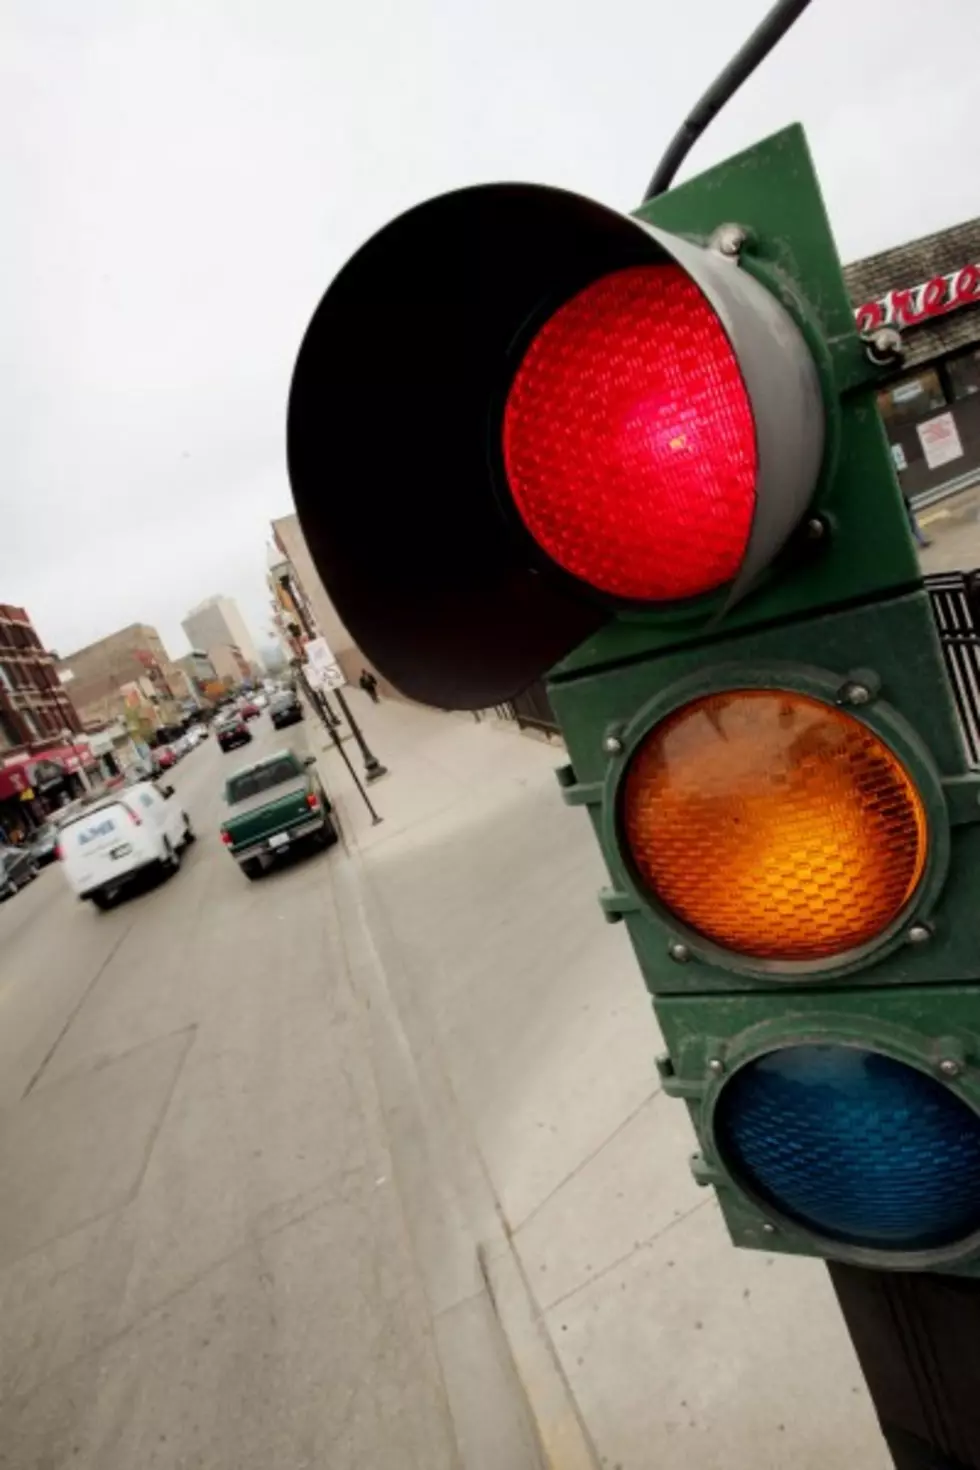 Yakima Drivers Time to Use 4-Way Stop Rule Wednesday